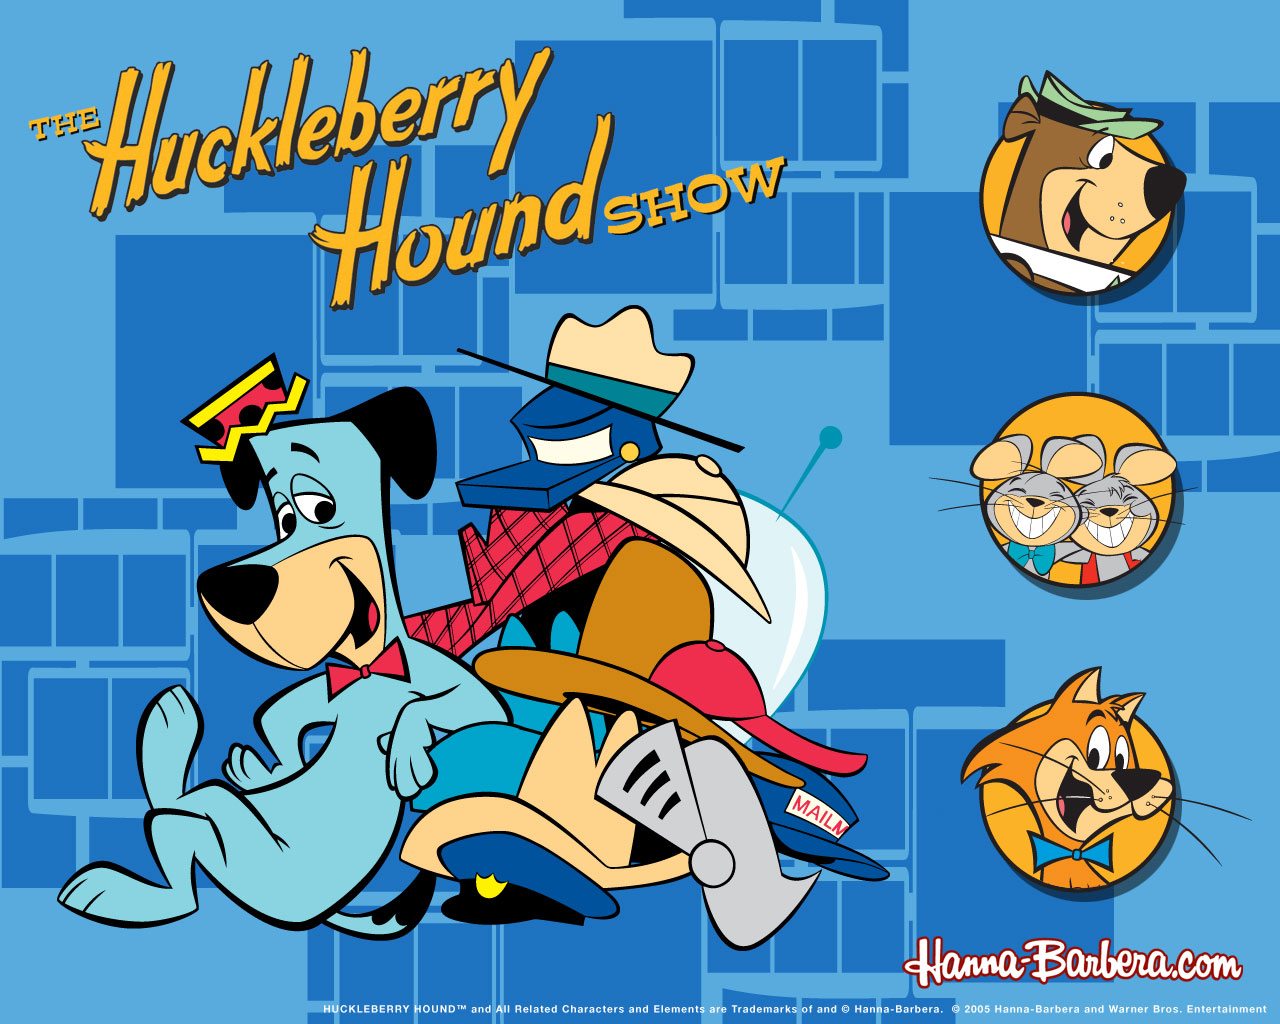 Hanna Barbera - Hanna Barbera Wallpaper (25844370) - Fanpop